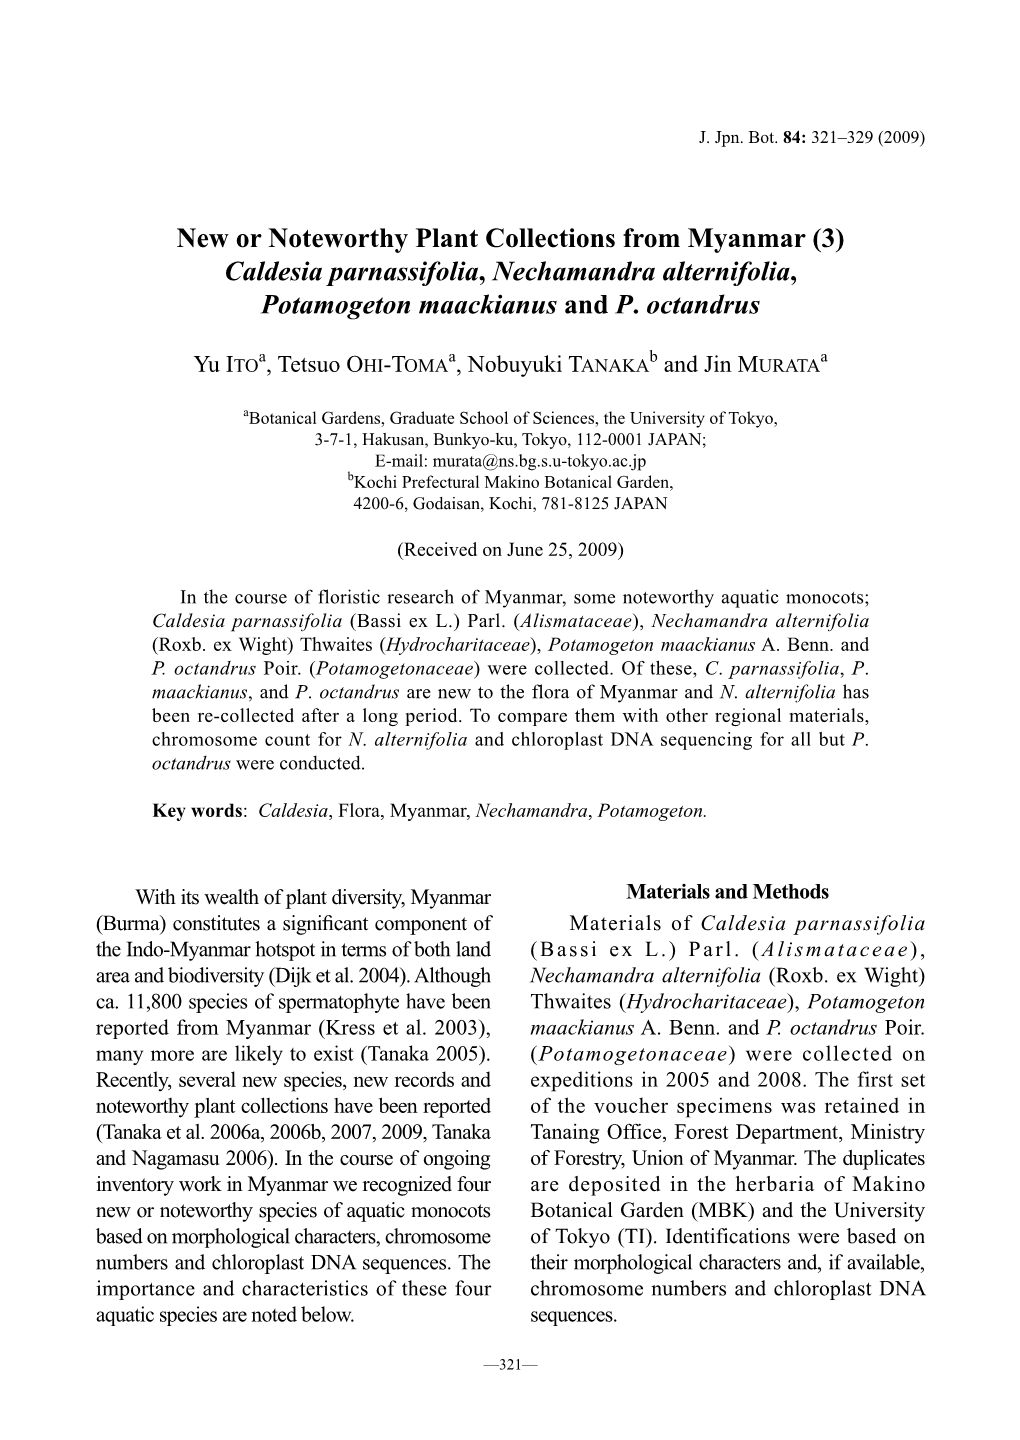 New Or Noteworthy Plant Collections from Myanmar (3) Caldesia Parnassifolia, Nechamandra Alternifolia, Potamogeton Maackianus and P